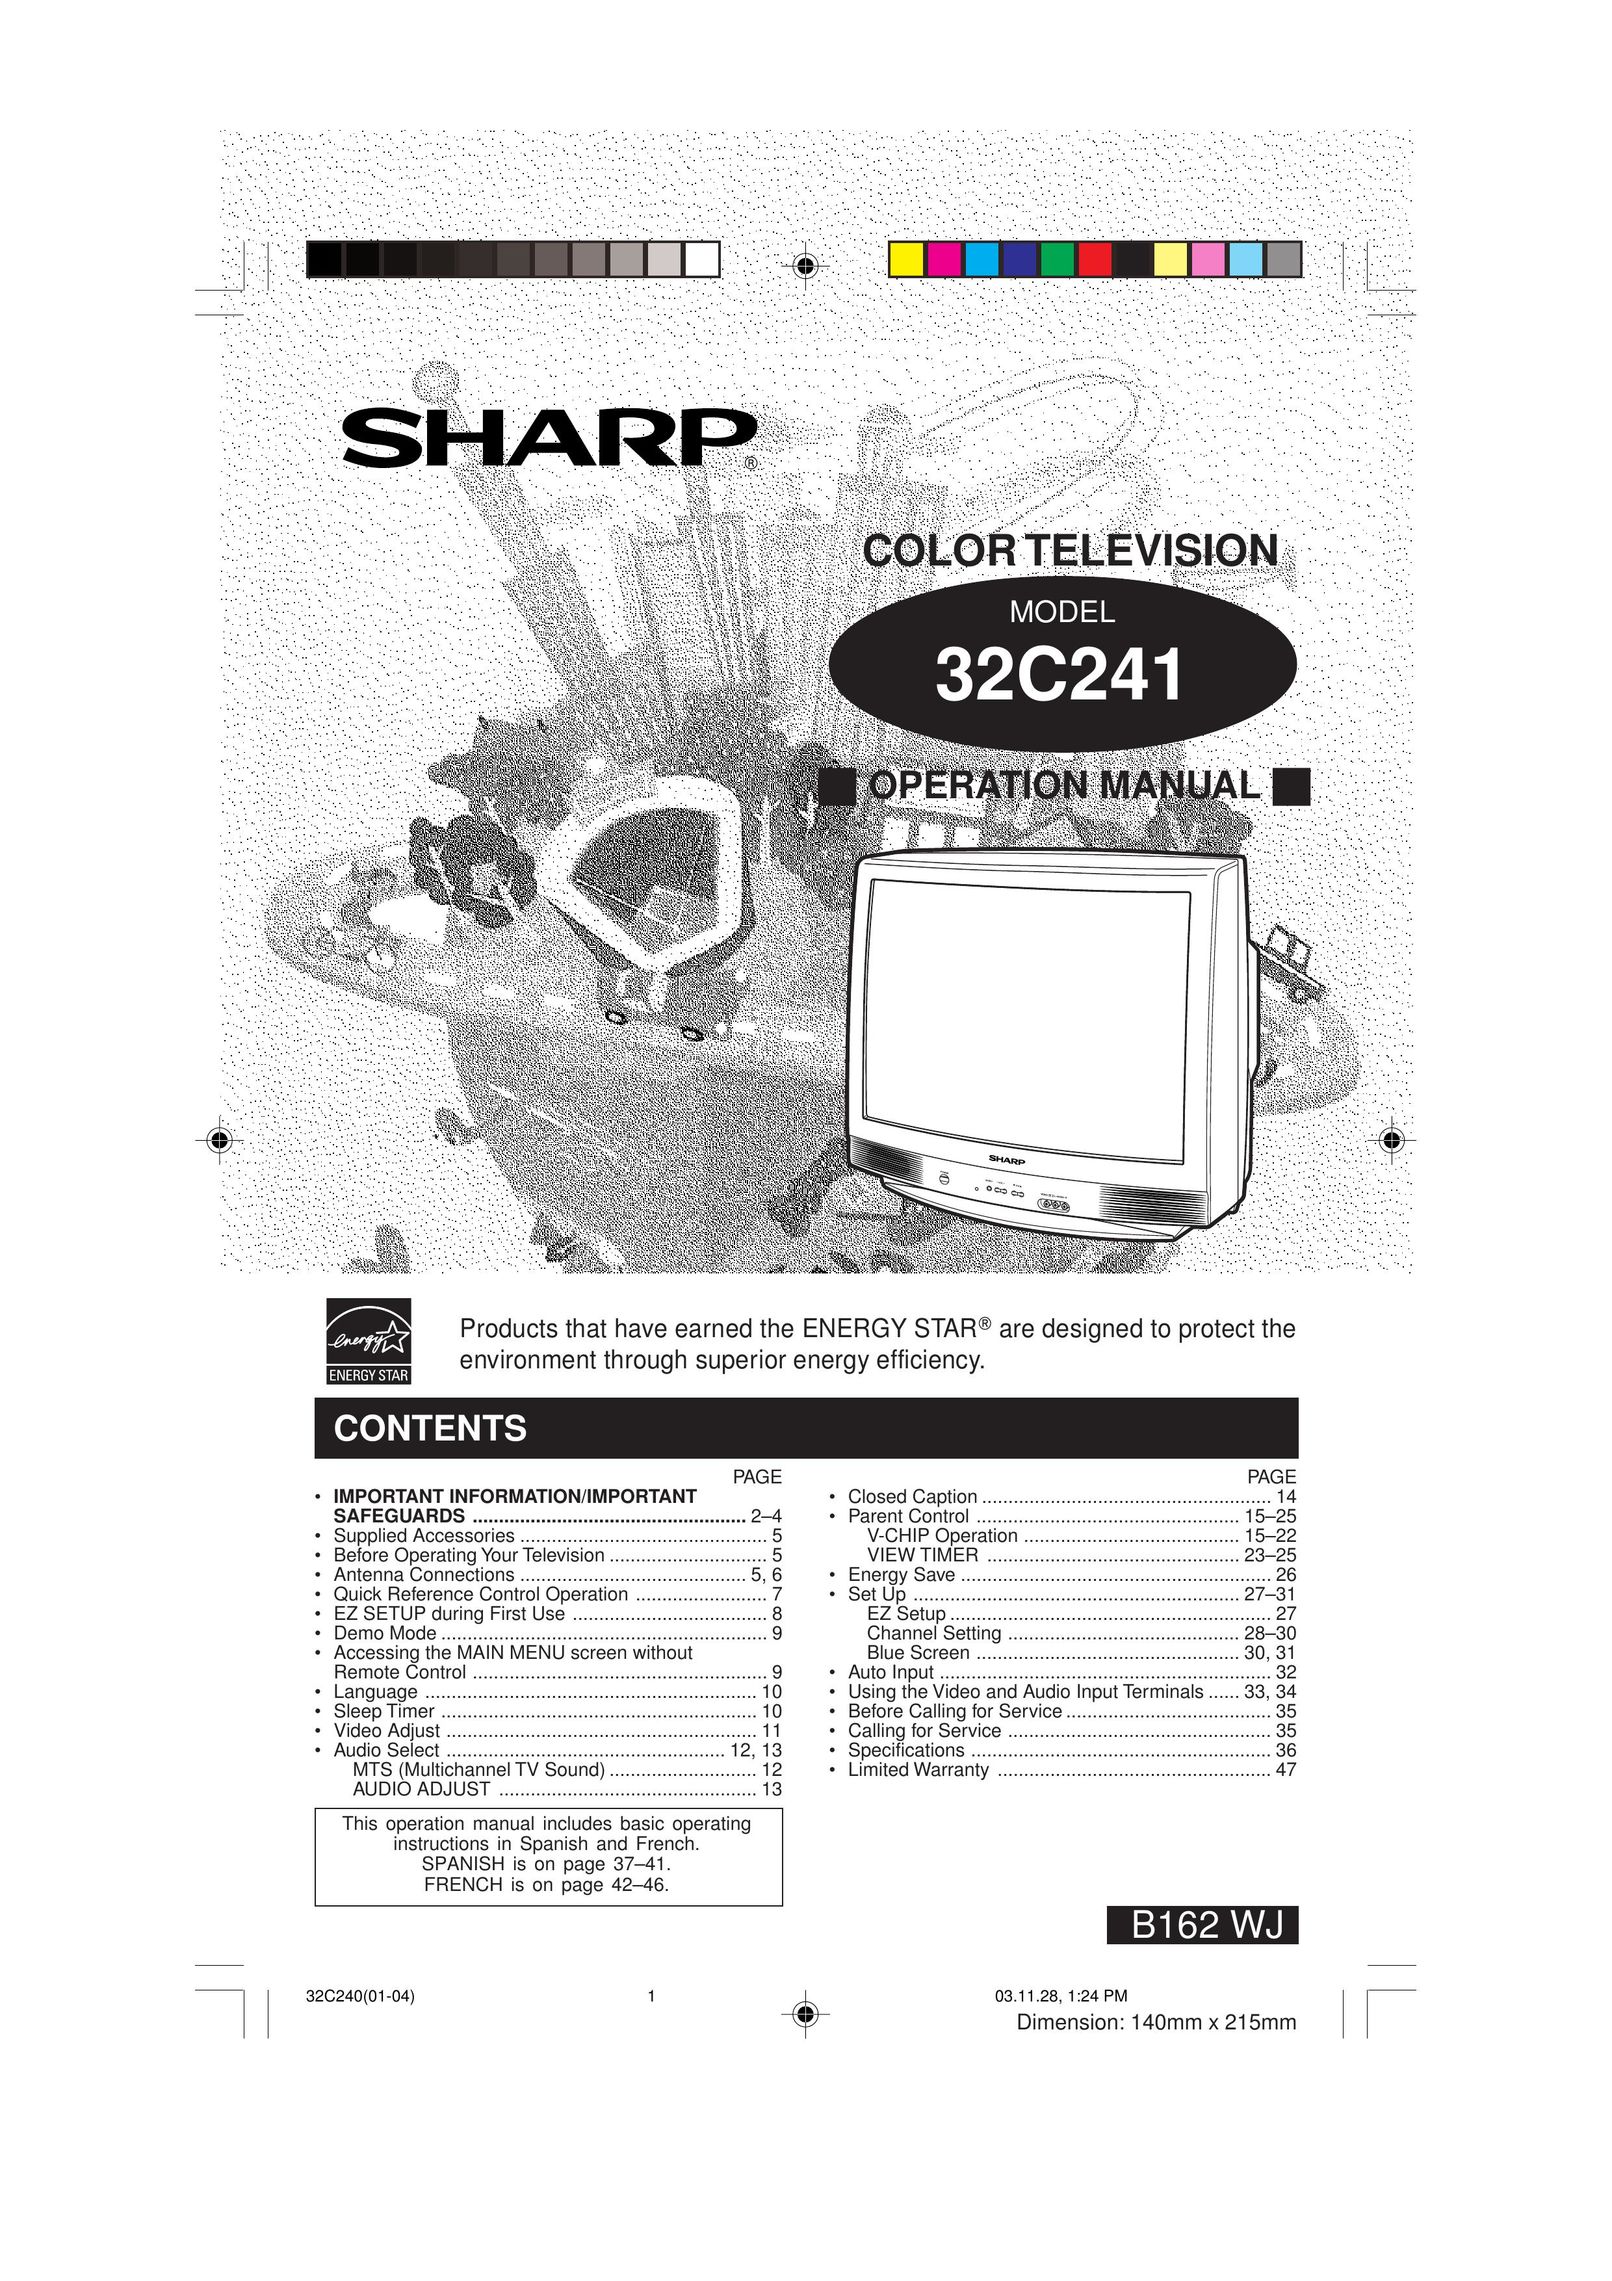 Sharp 32C241 CRT Television User Manual